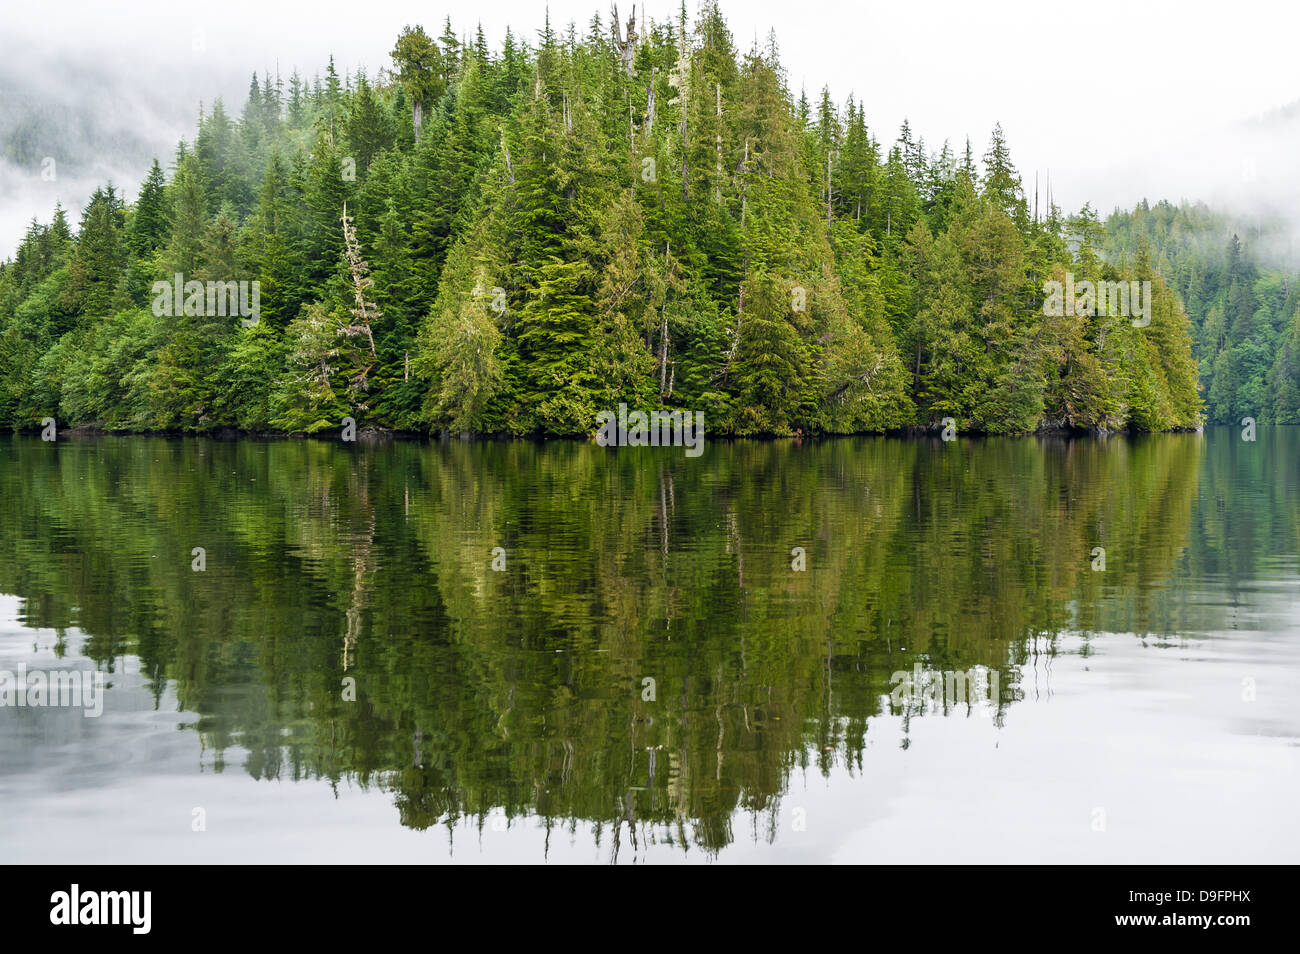 Coastal scenery in Great Bear Rainforest, British Columbia, Canada Stock Photo